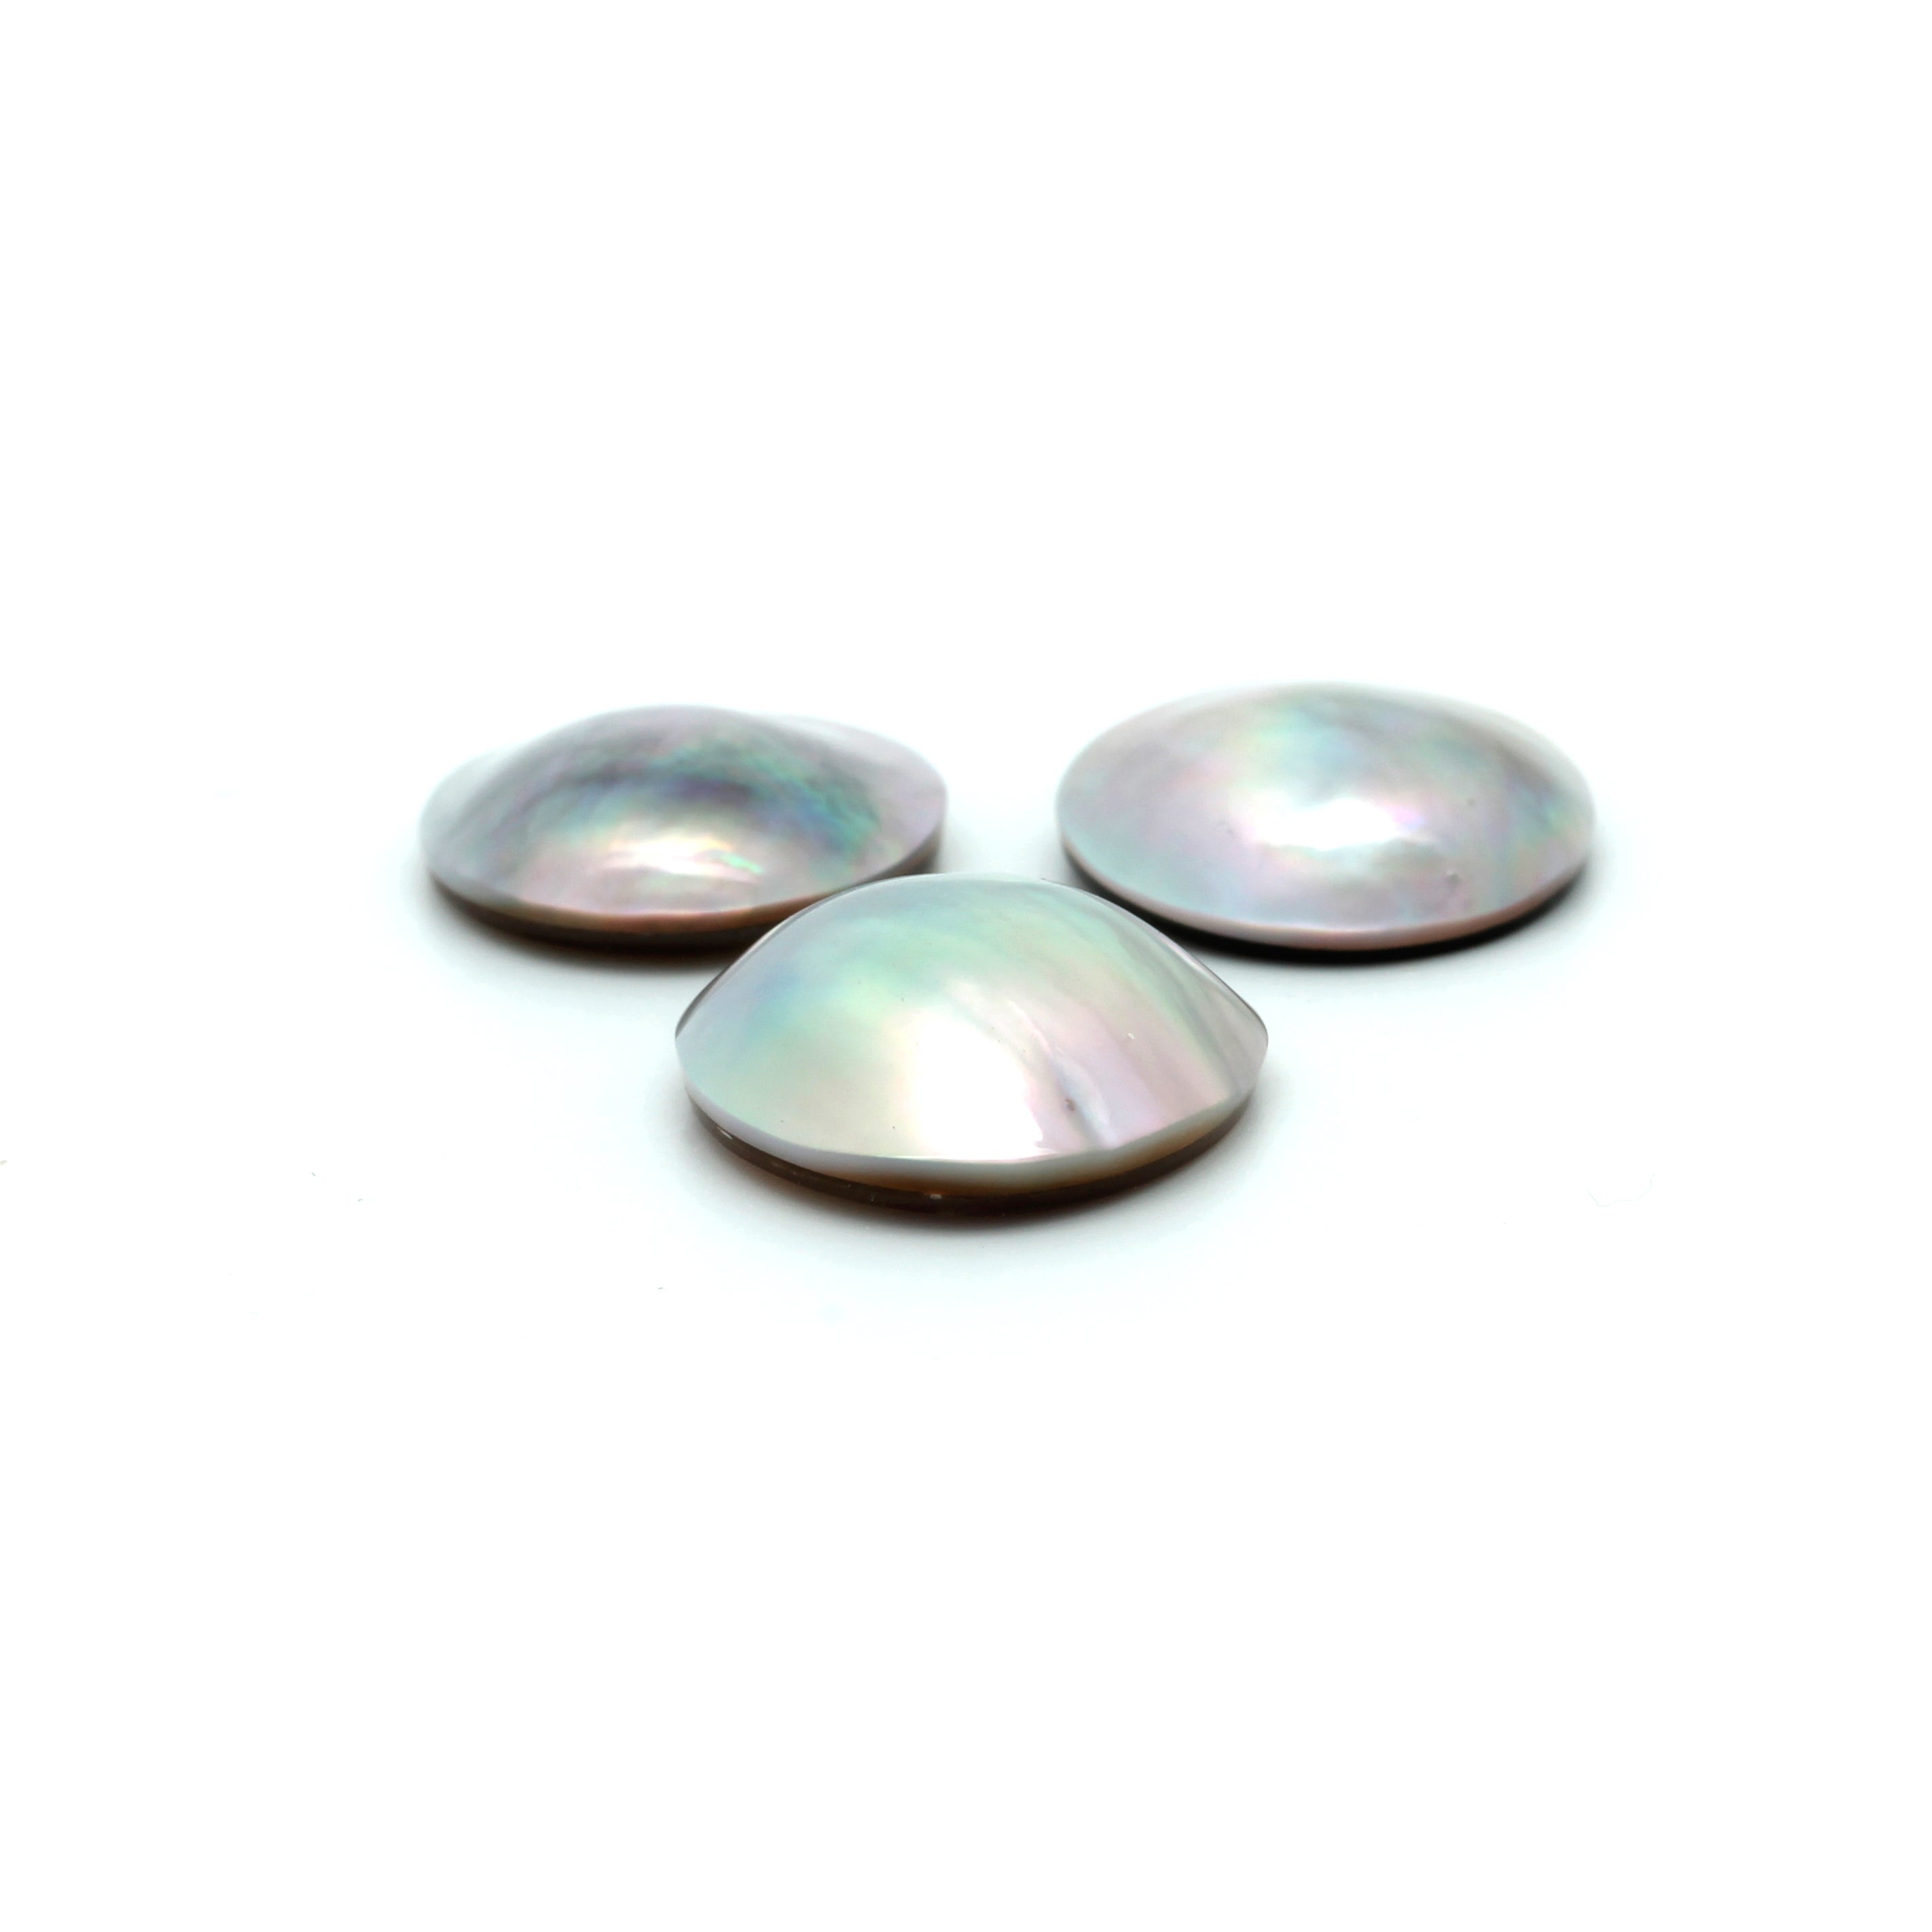 3 Oval Cortez Mabe Pearls B grade